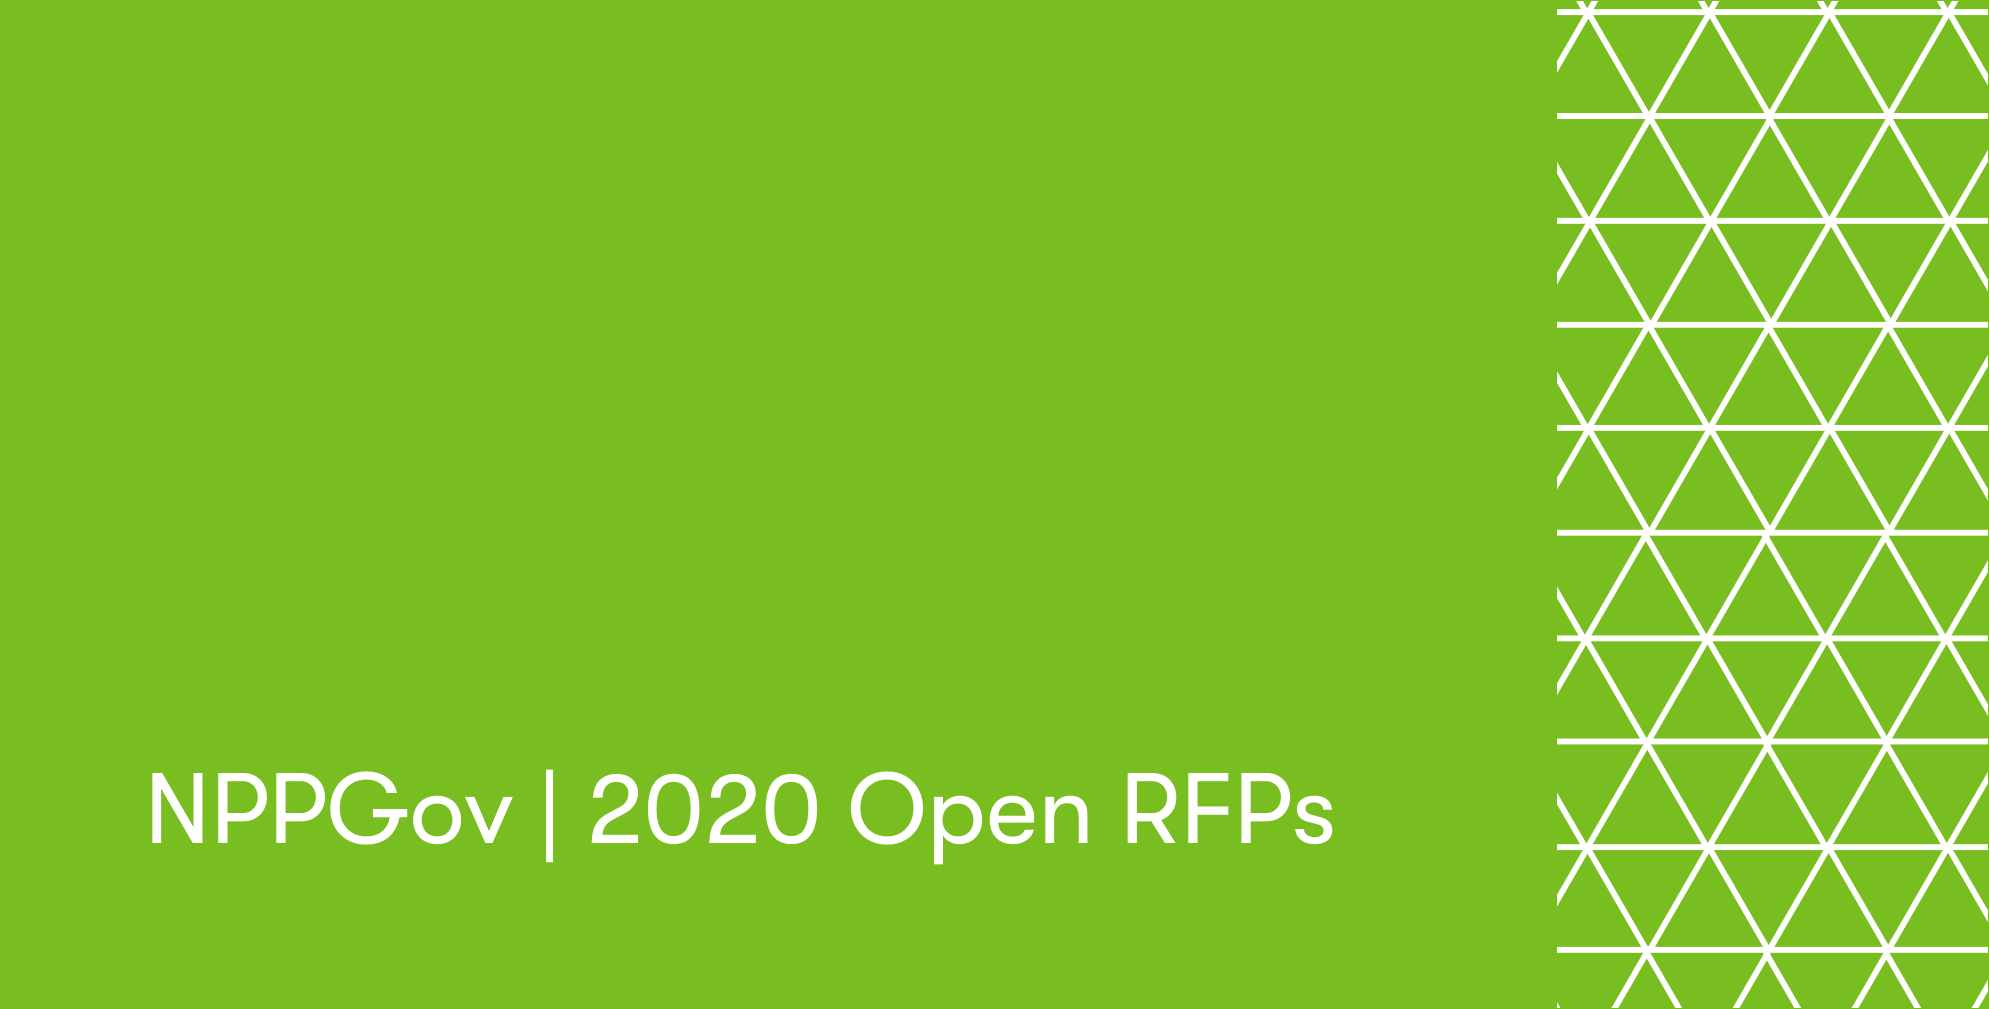 NPPGov 2020 RFP Announcement